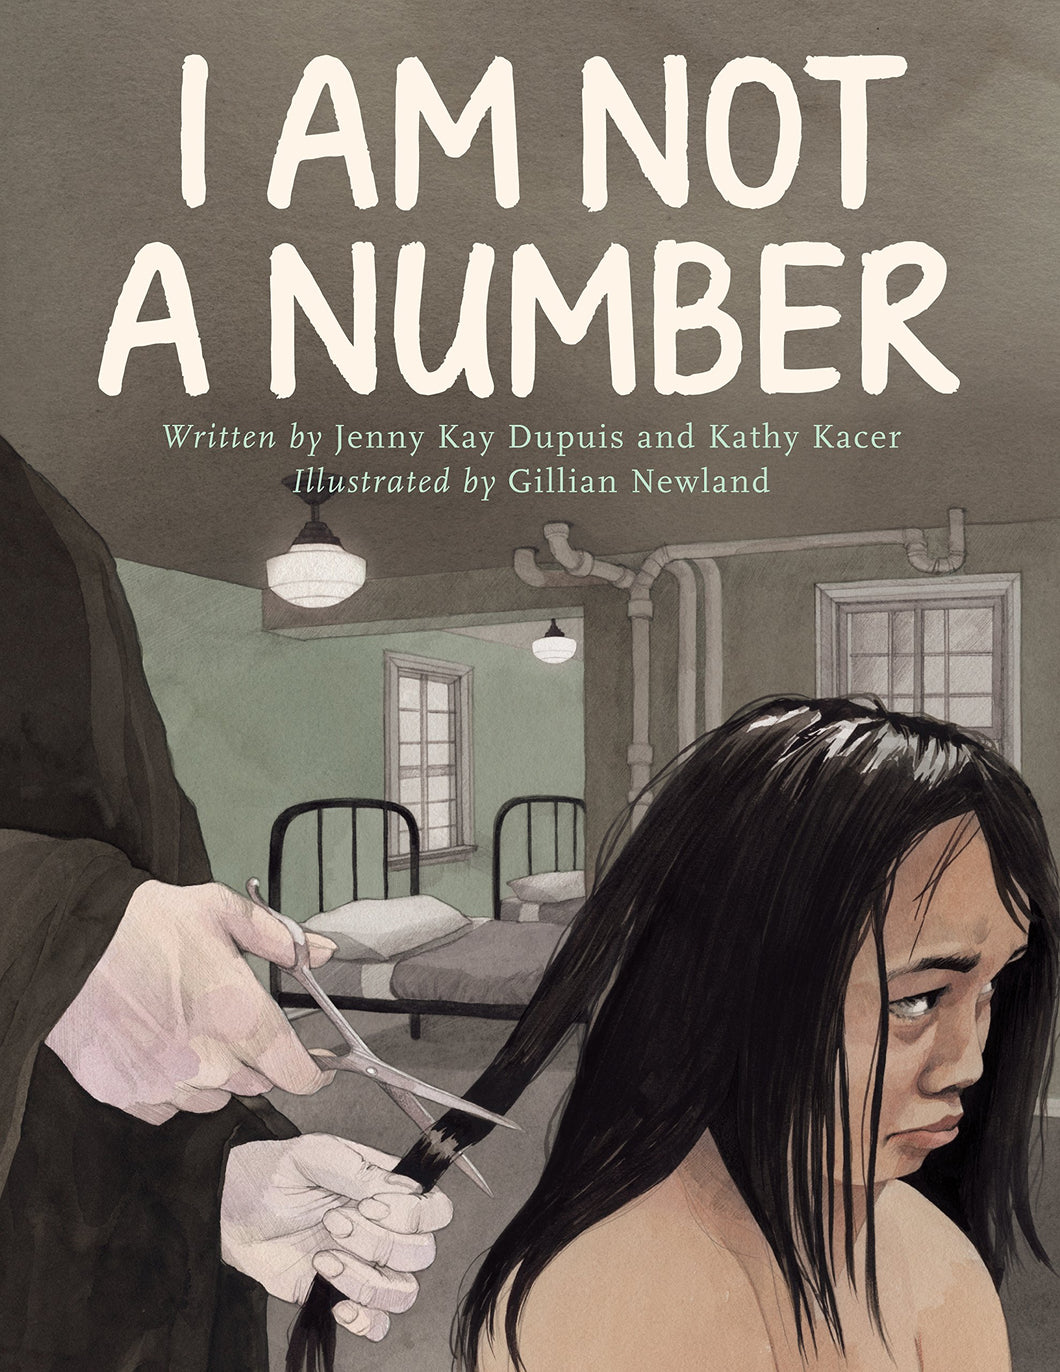 I Am Not A Number [Jenny Kay Dupuis and Kathy Kacer]